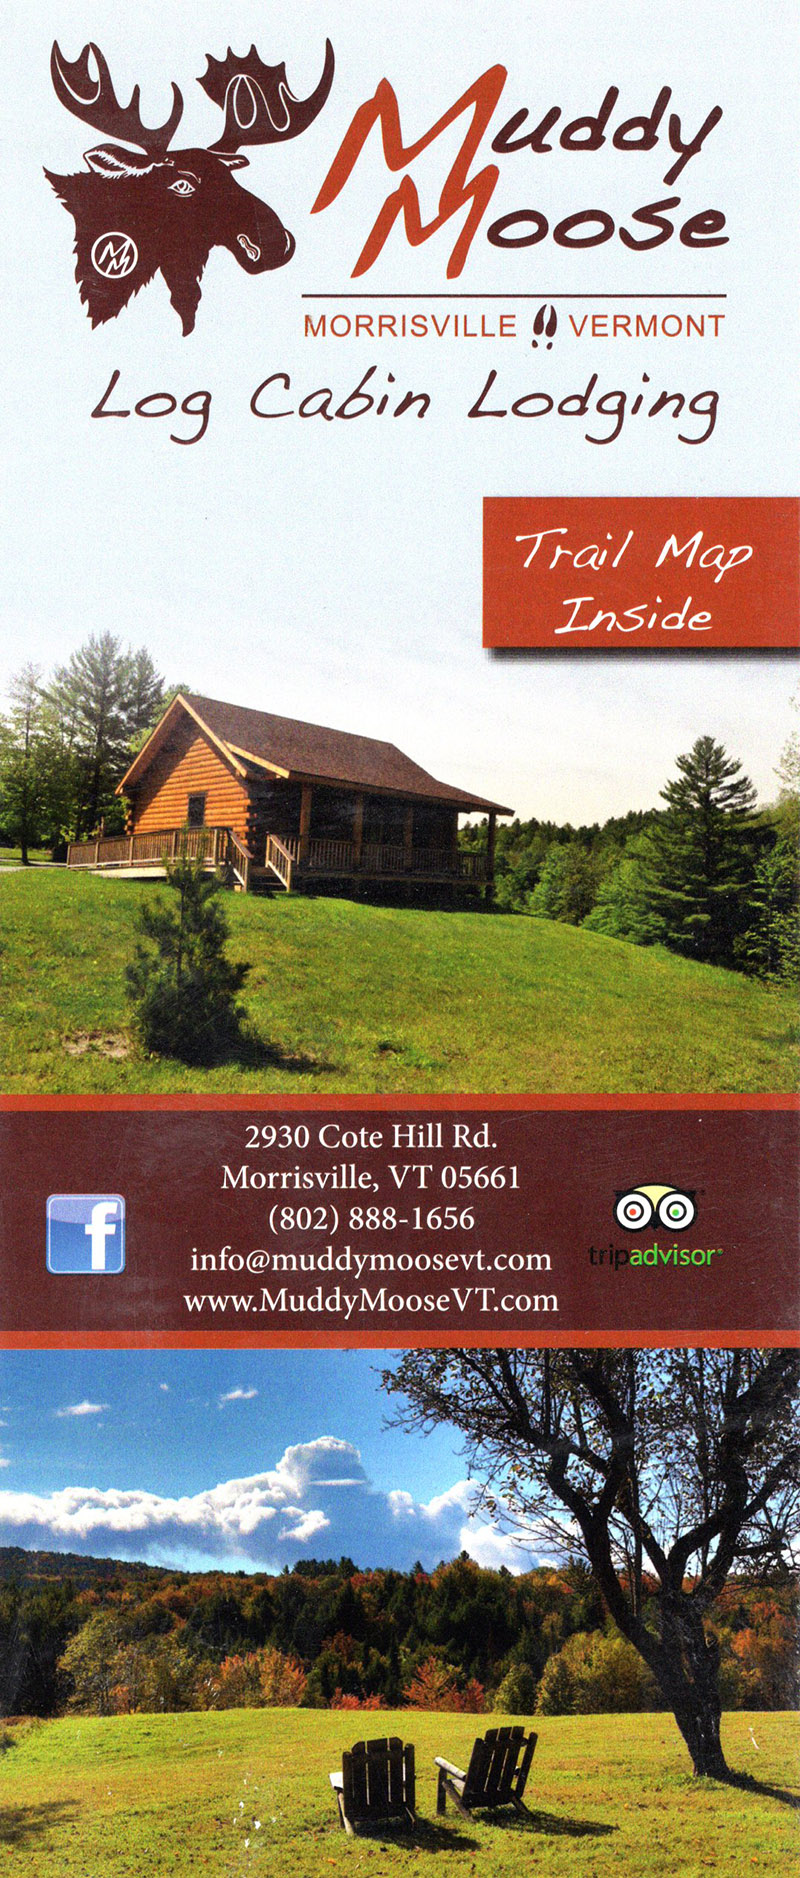 Muddy Moose brochure thumbnail